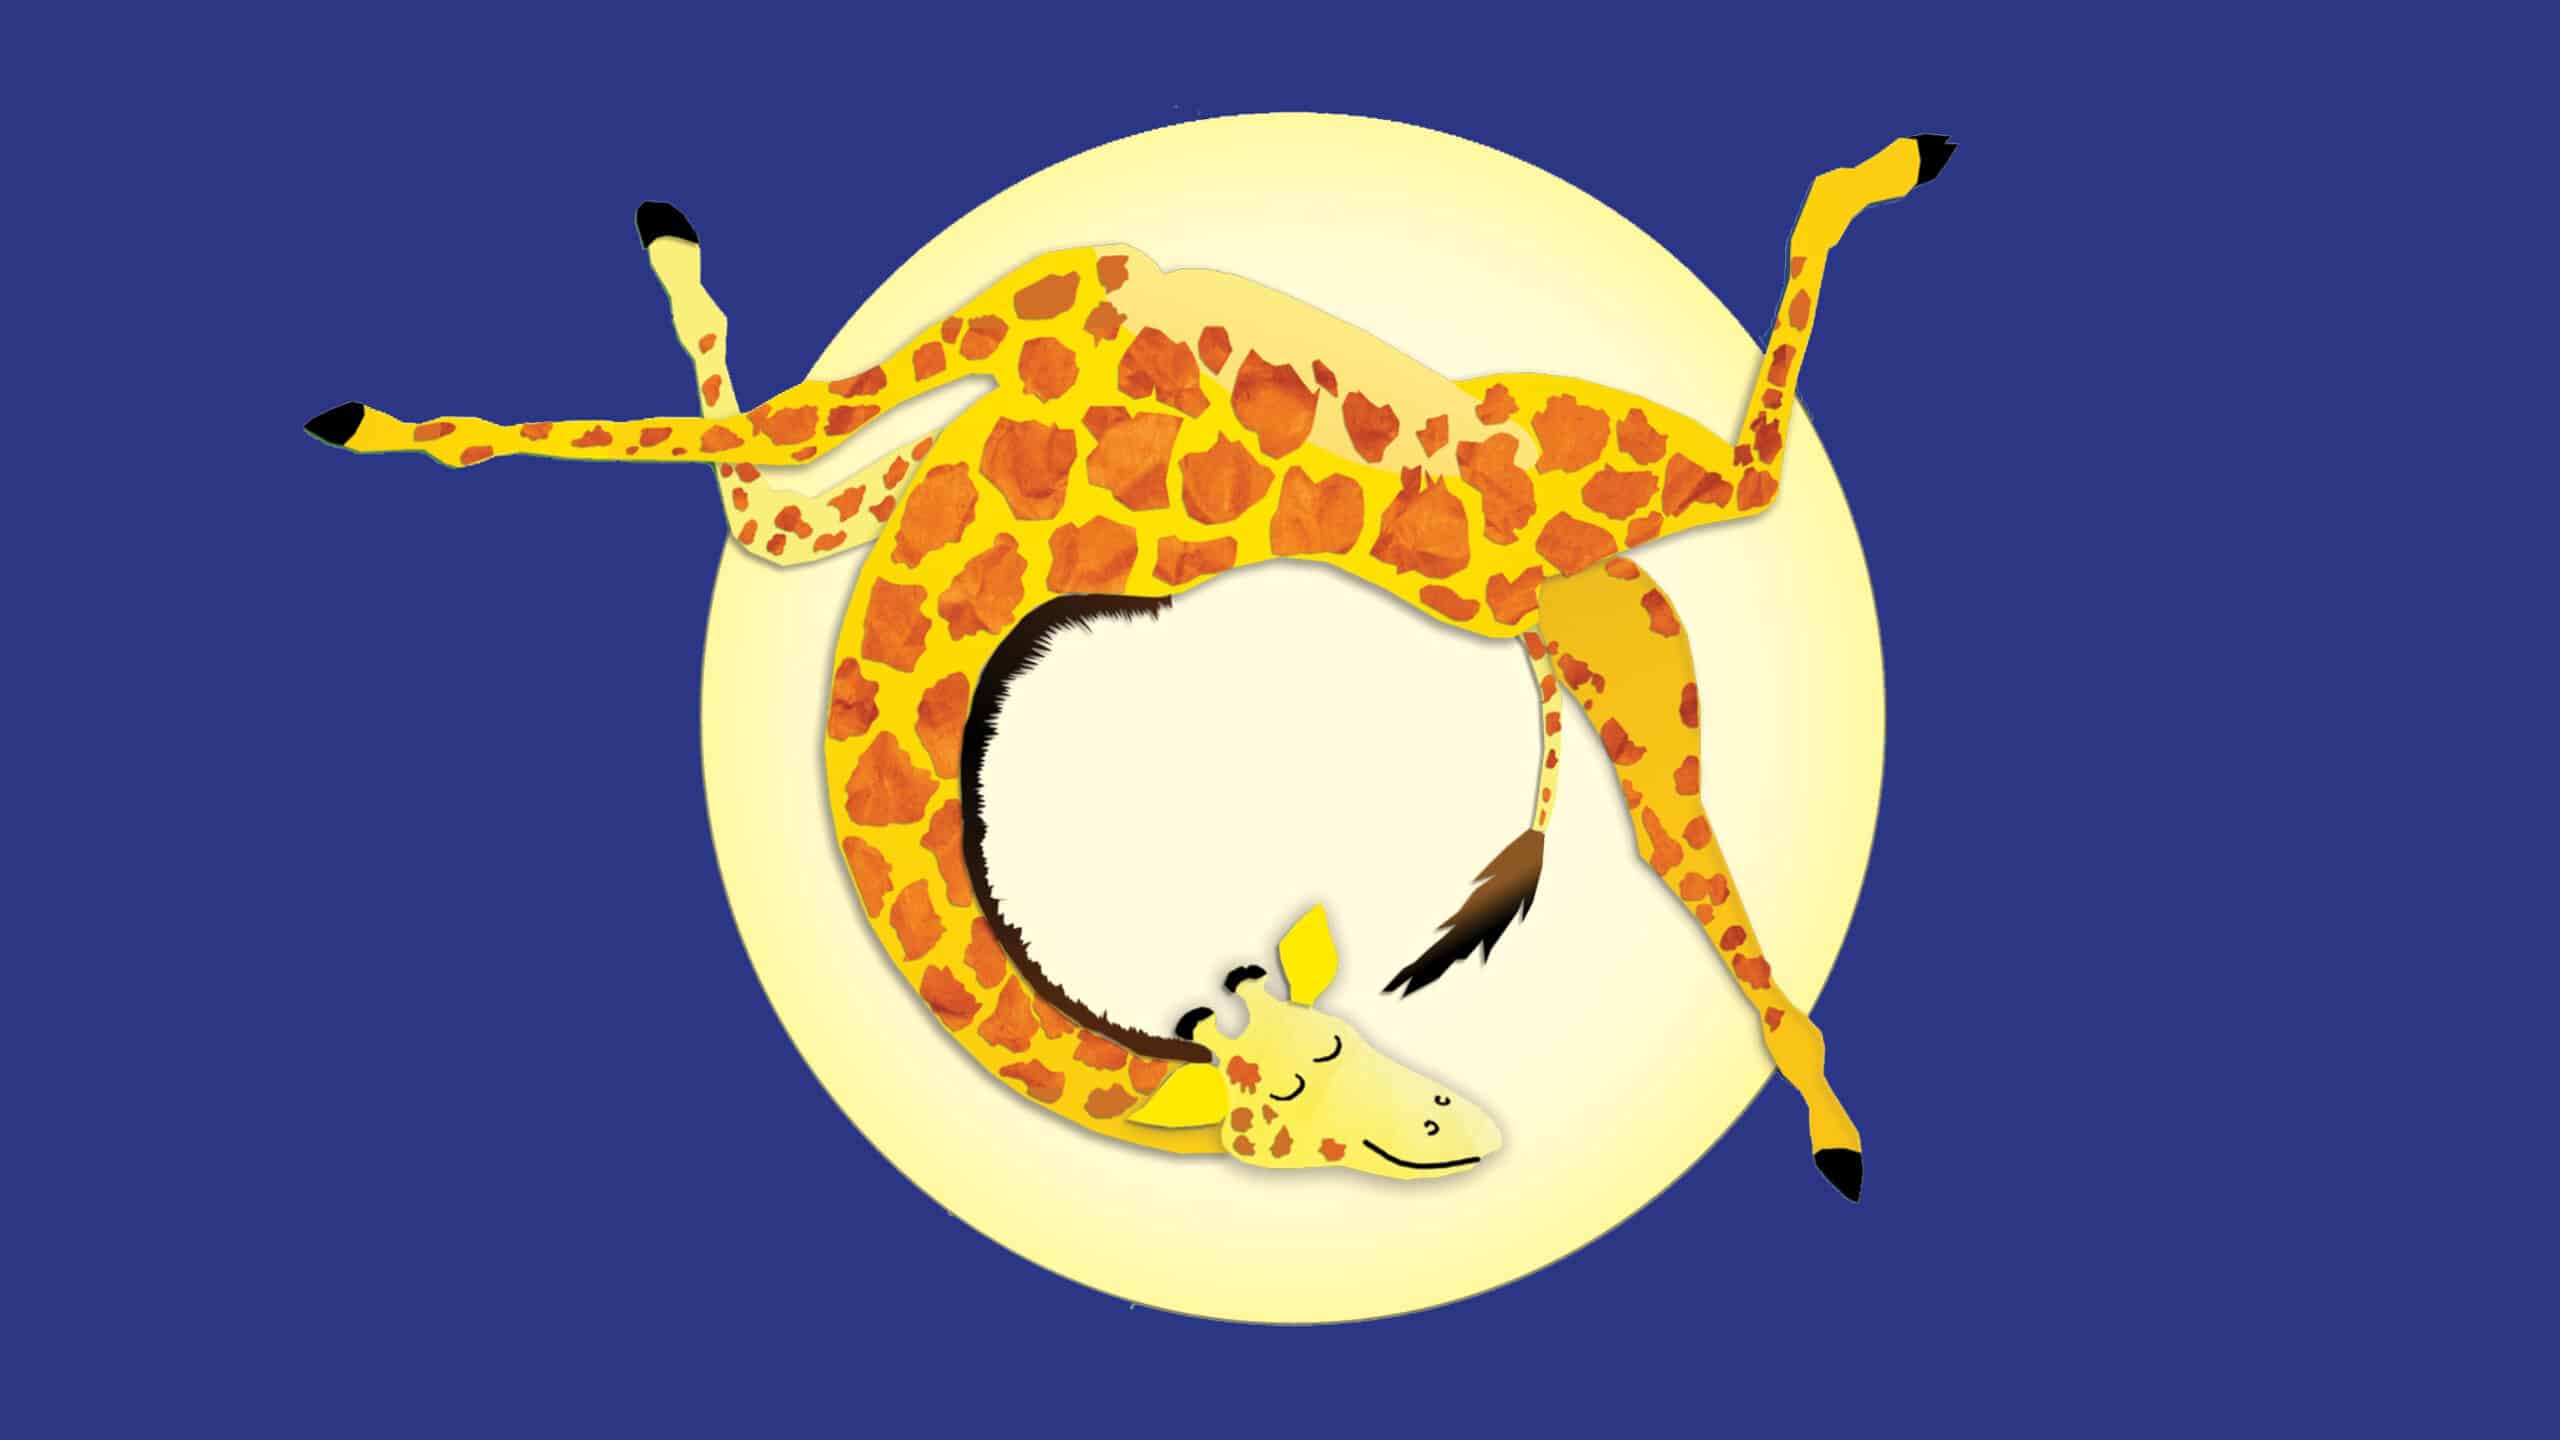 Illustration of giraffe dancing